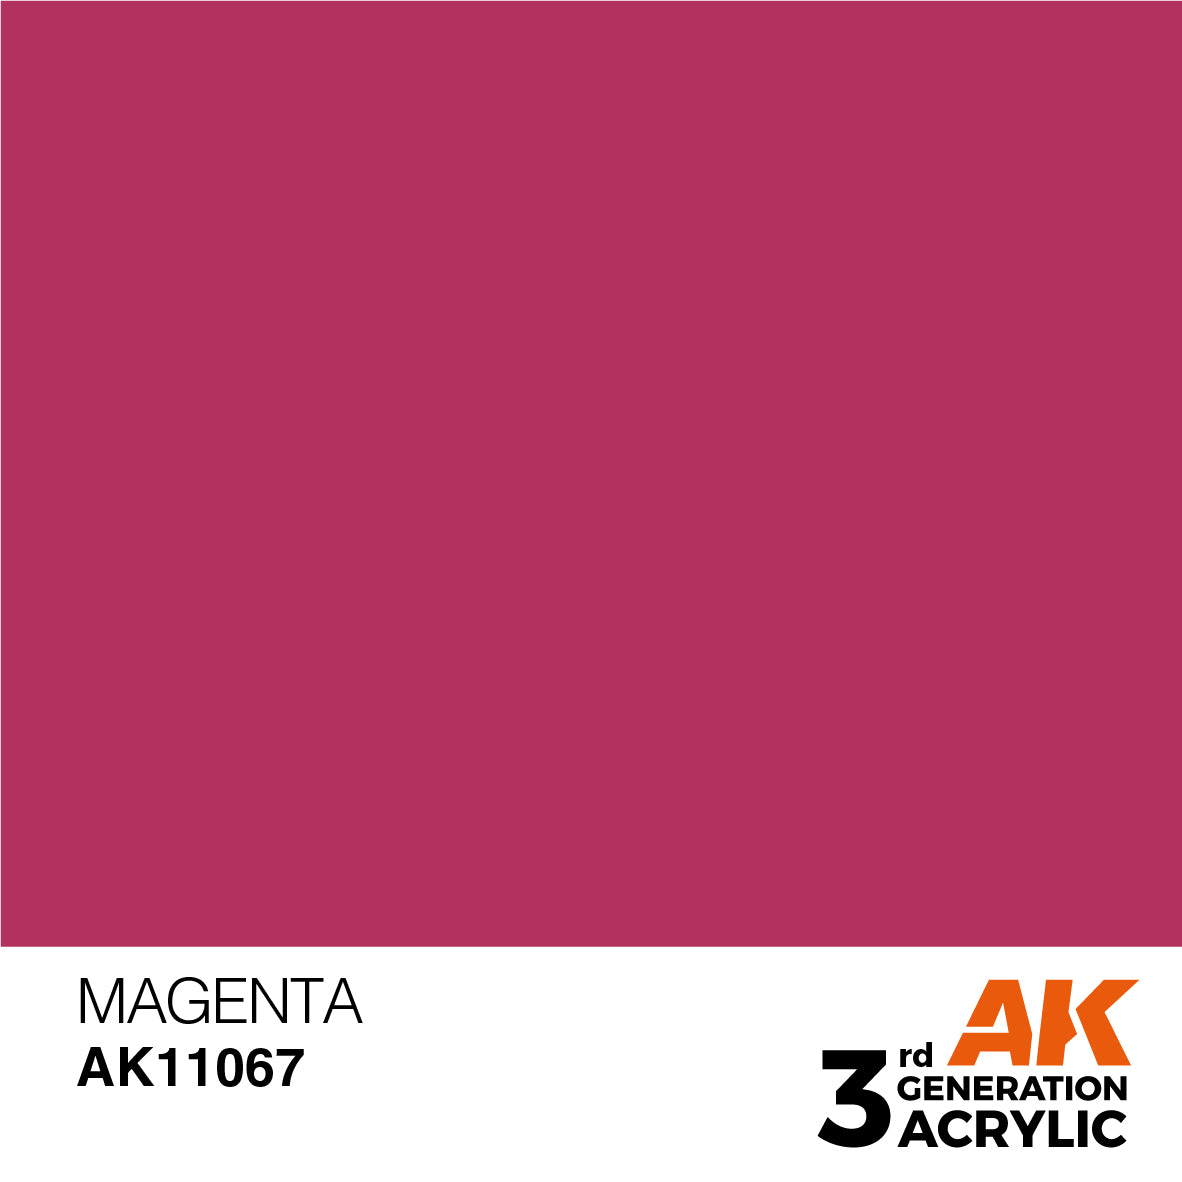 Magenta – Standard